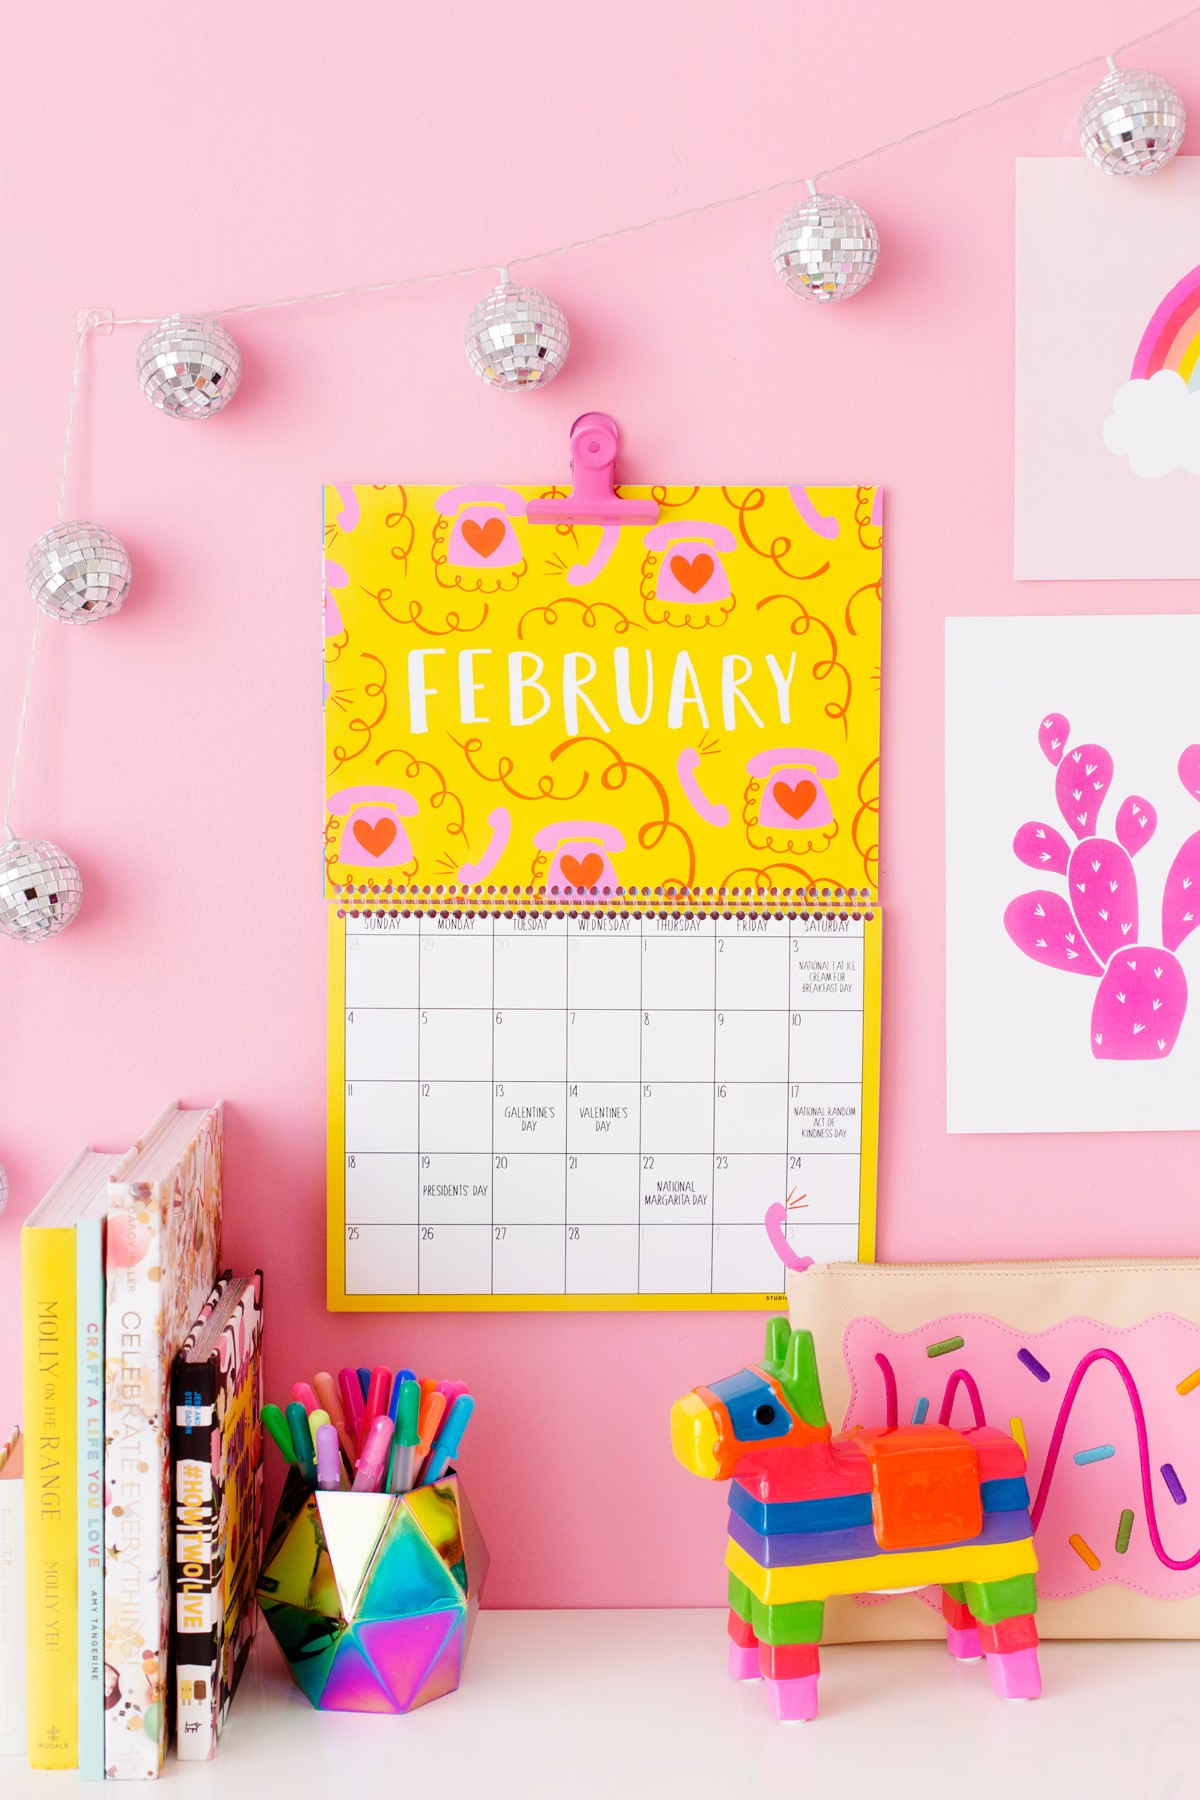 2018 Free Printable Wall Calendar Studio DIY